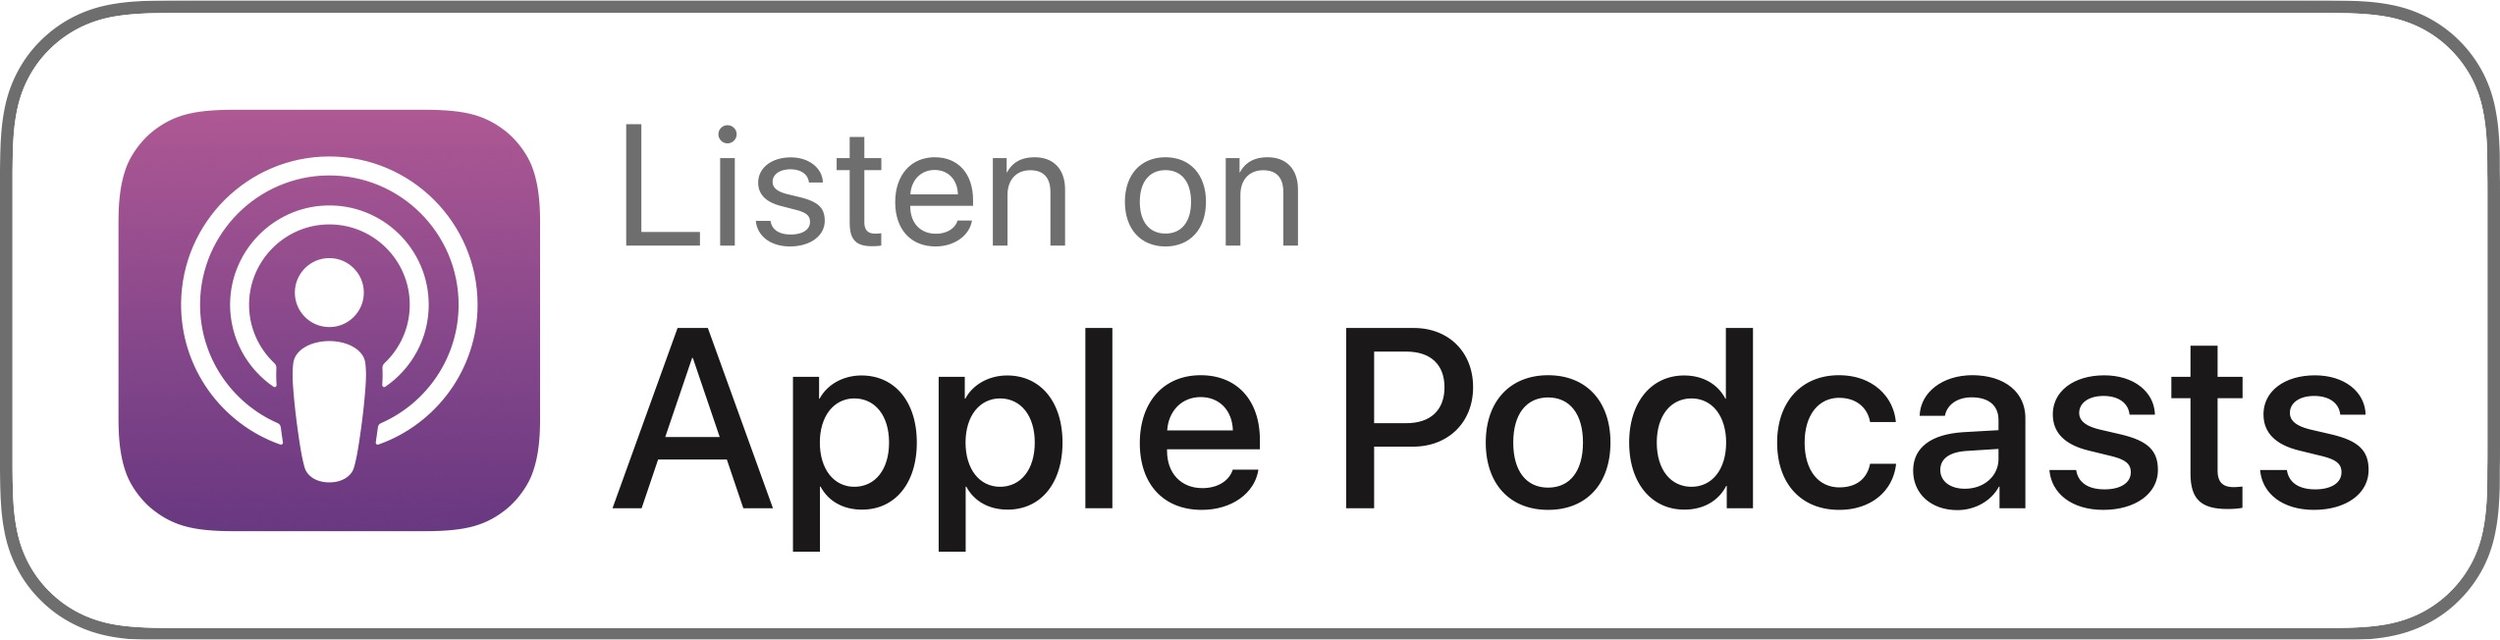 Apple Podcasts.jpg